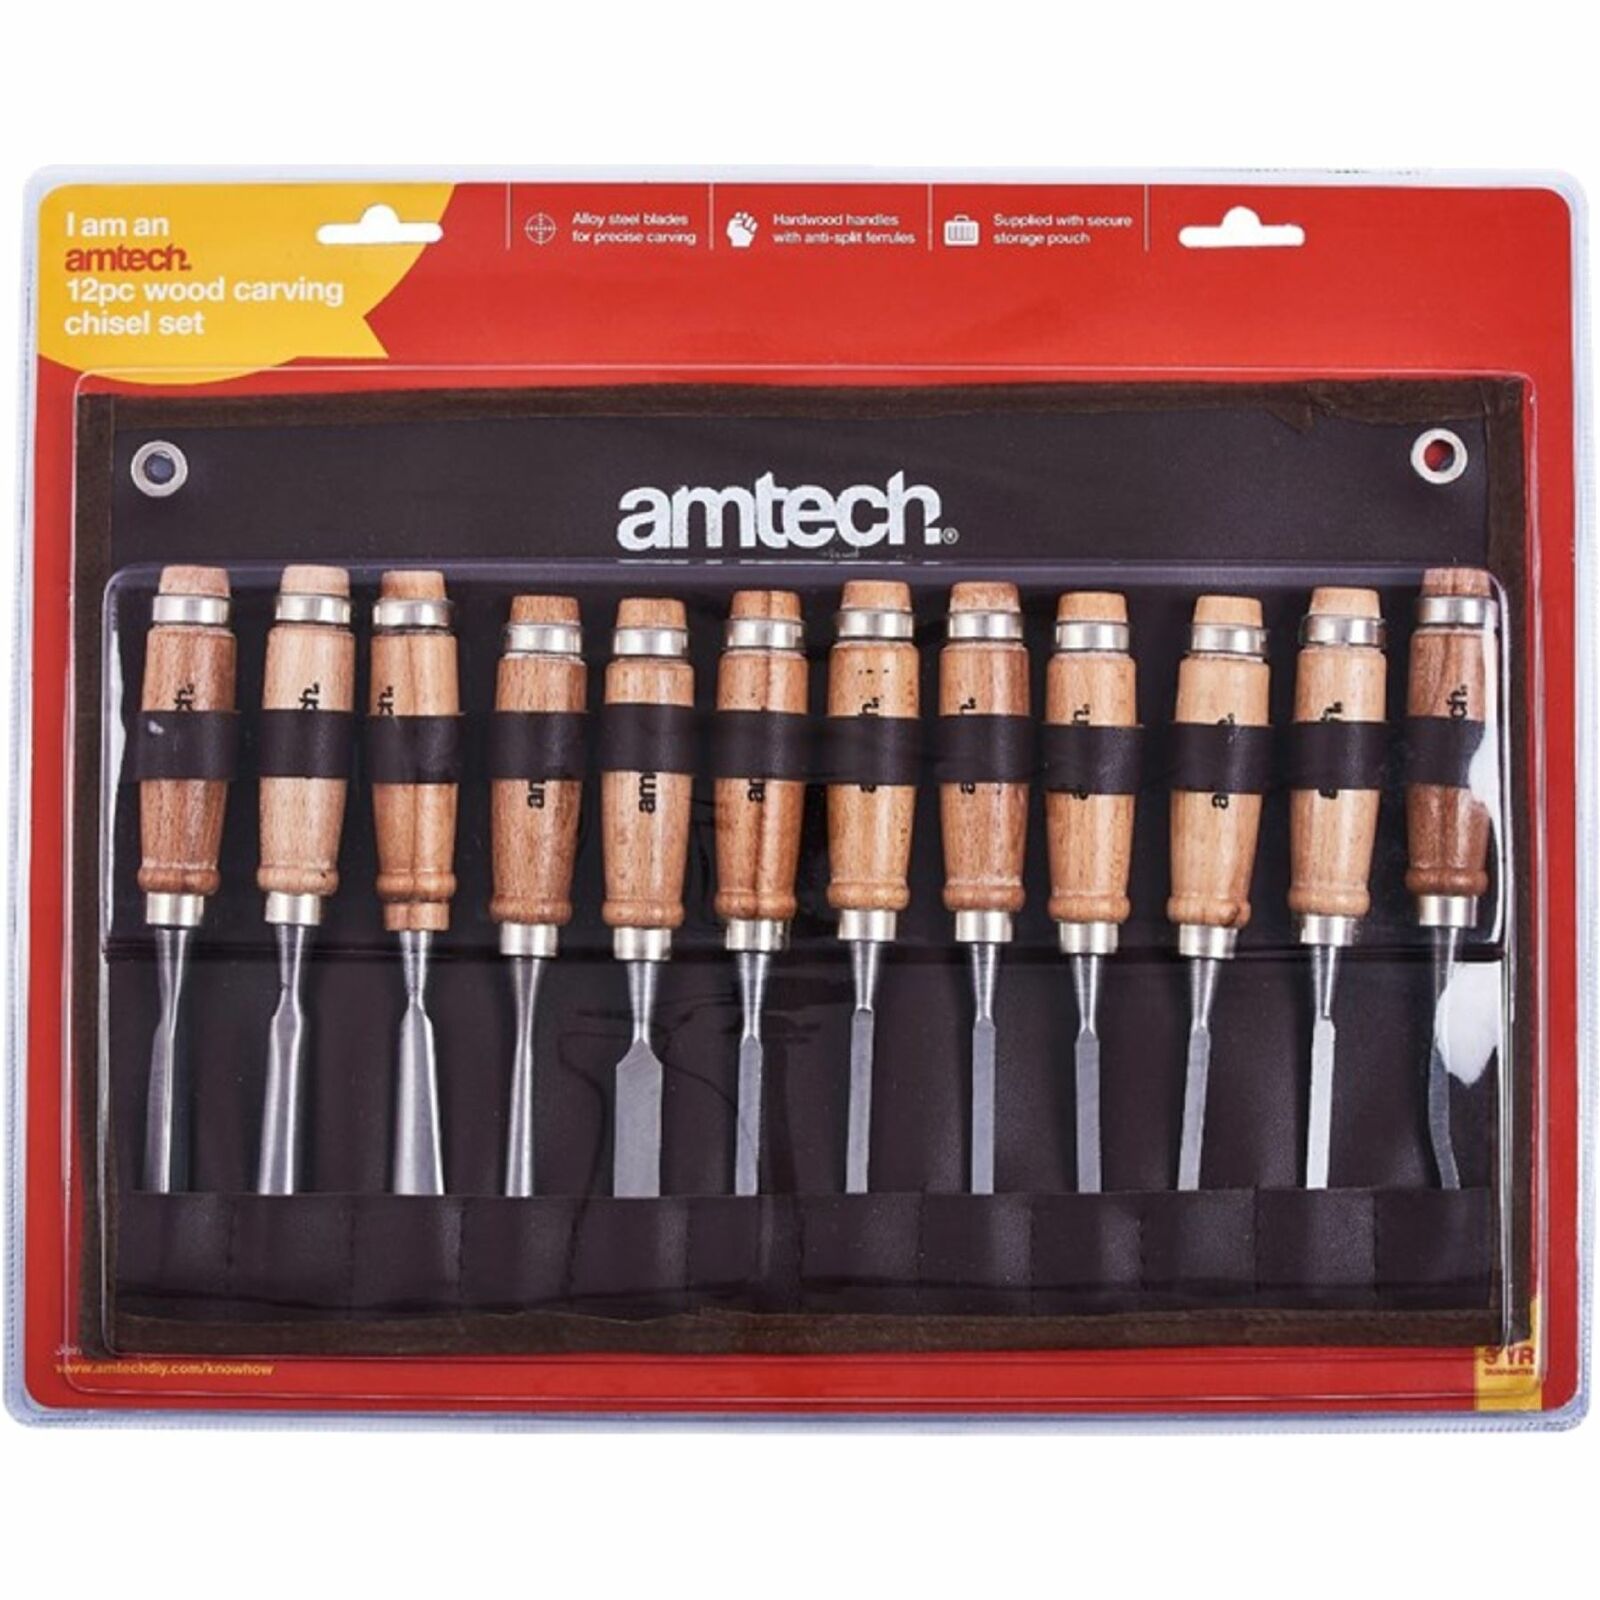 Amtech 12pc Wood Sculpt Carving Knives Chisels Steel Tool Blades Kit Set